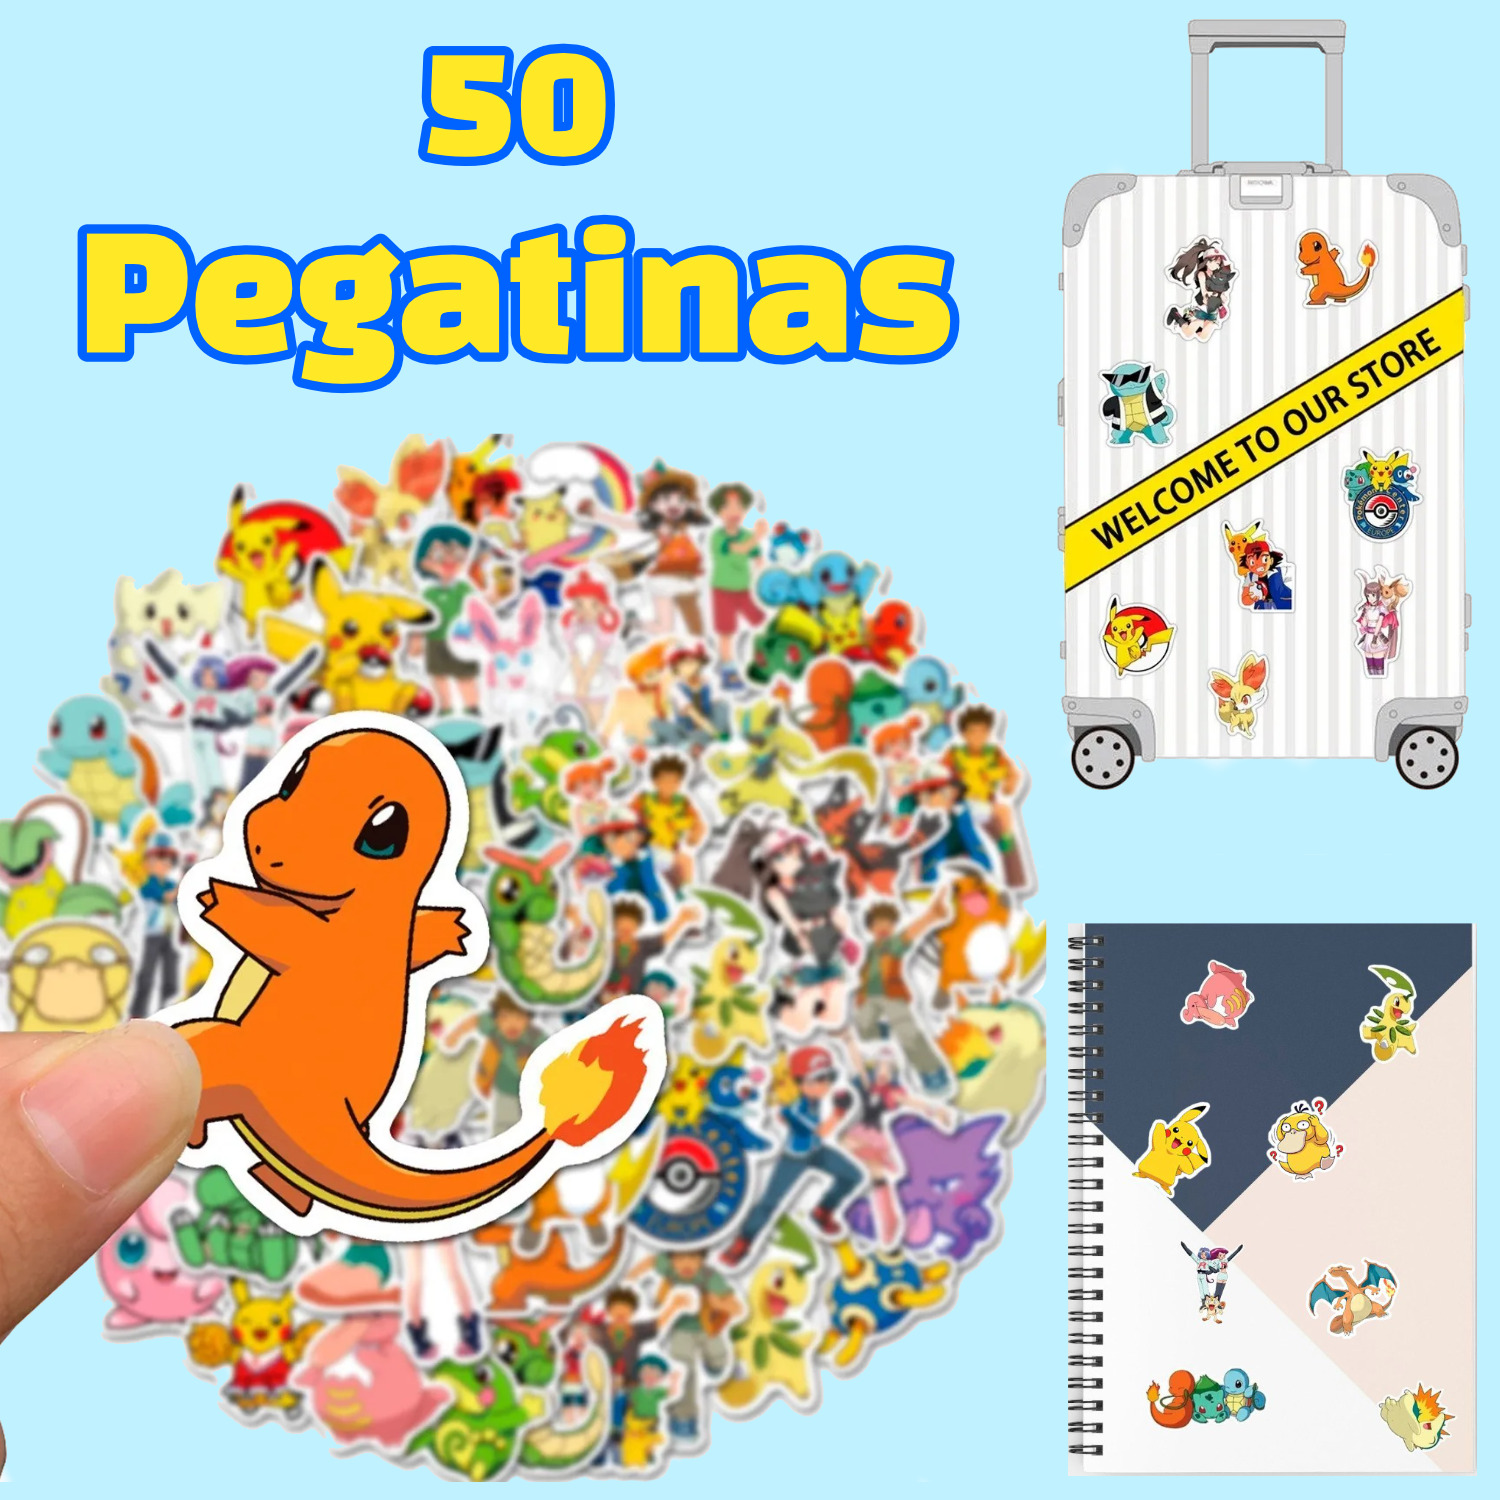 Pegatinas, 50 piezas Pegatinas impermeables de pokemon, pegatinas